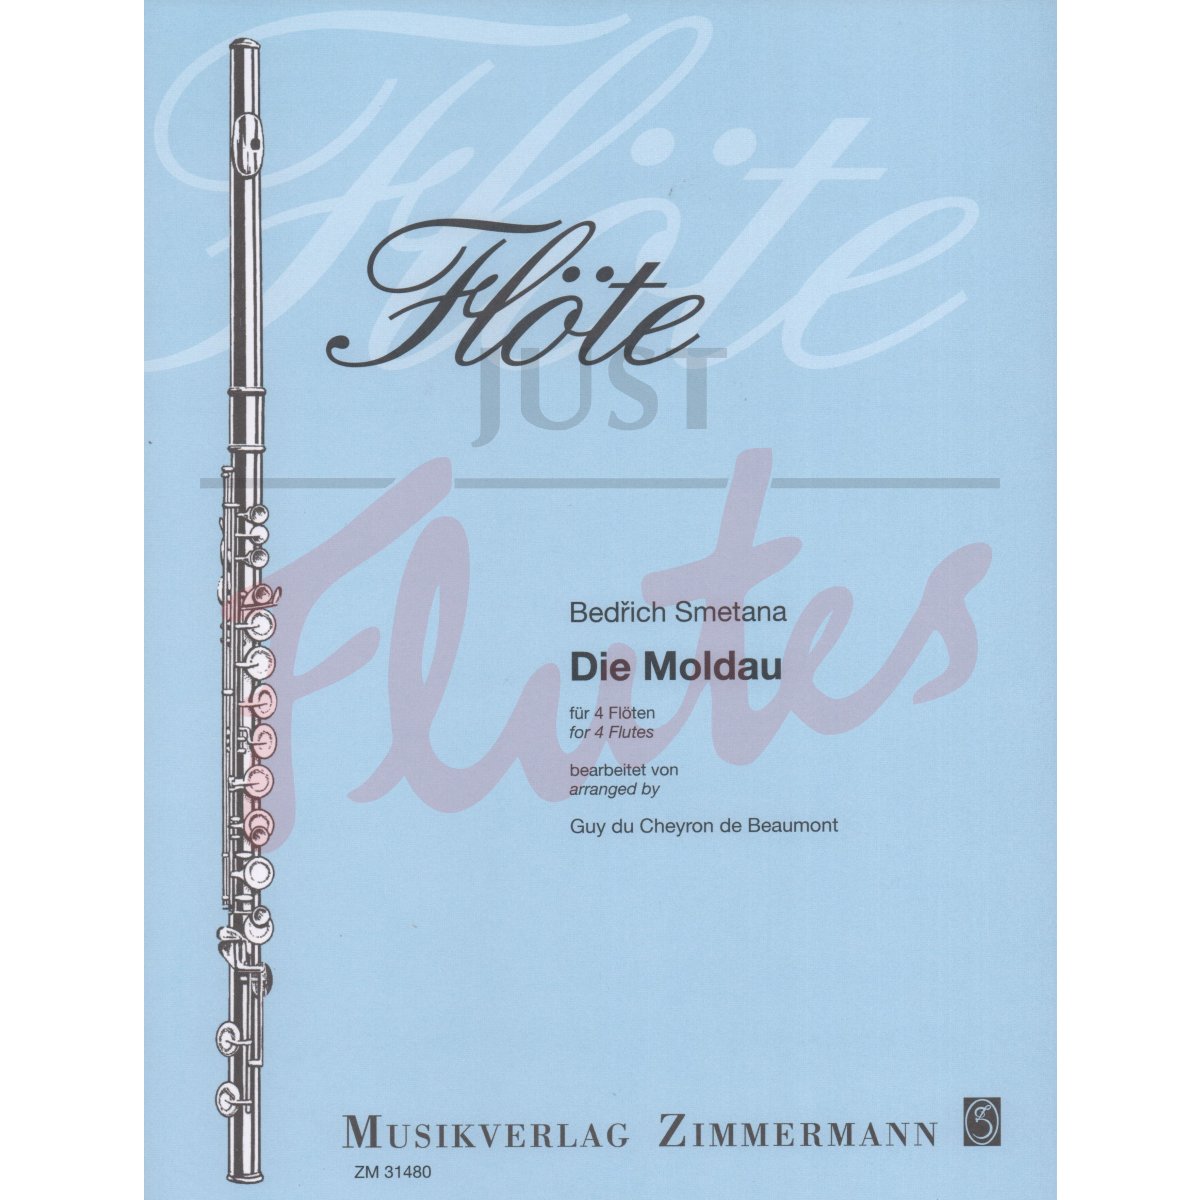 Die Moldau for 4 Flutes